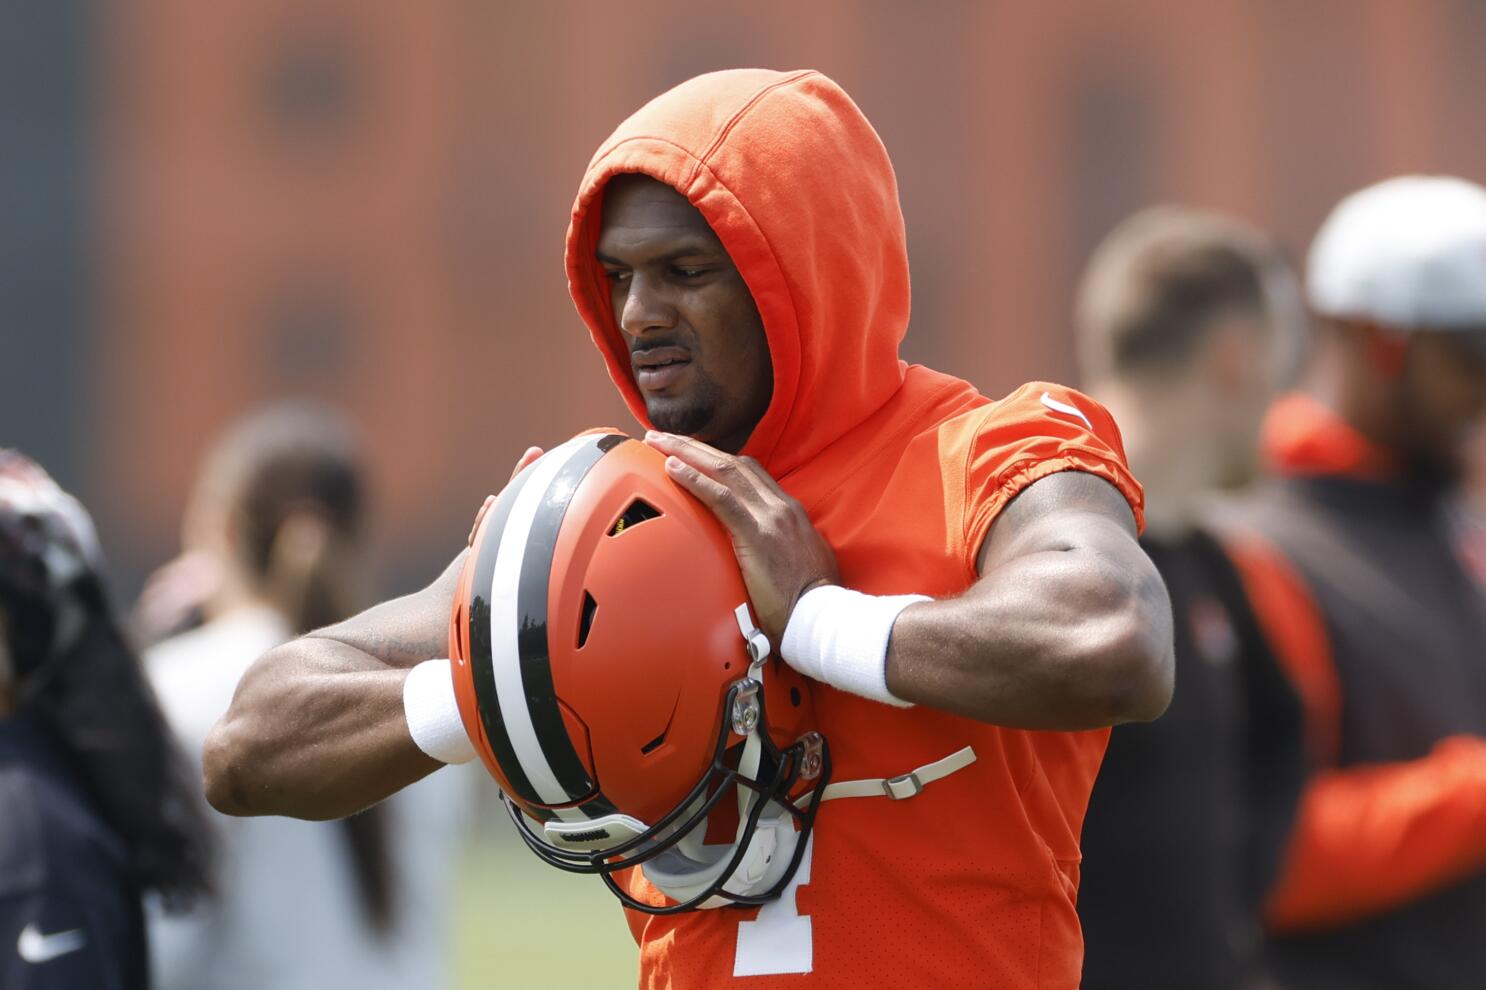 Browns' alternate helmet less colorful than regular orange one - Los  Angeles Times